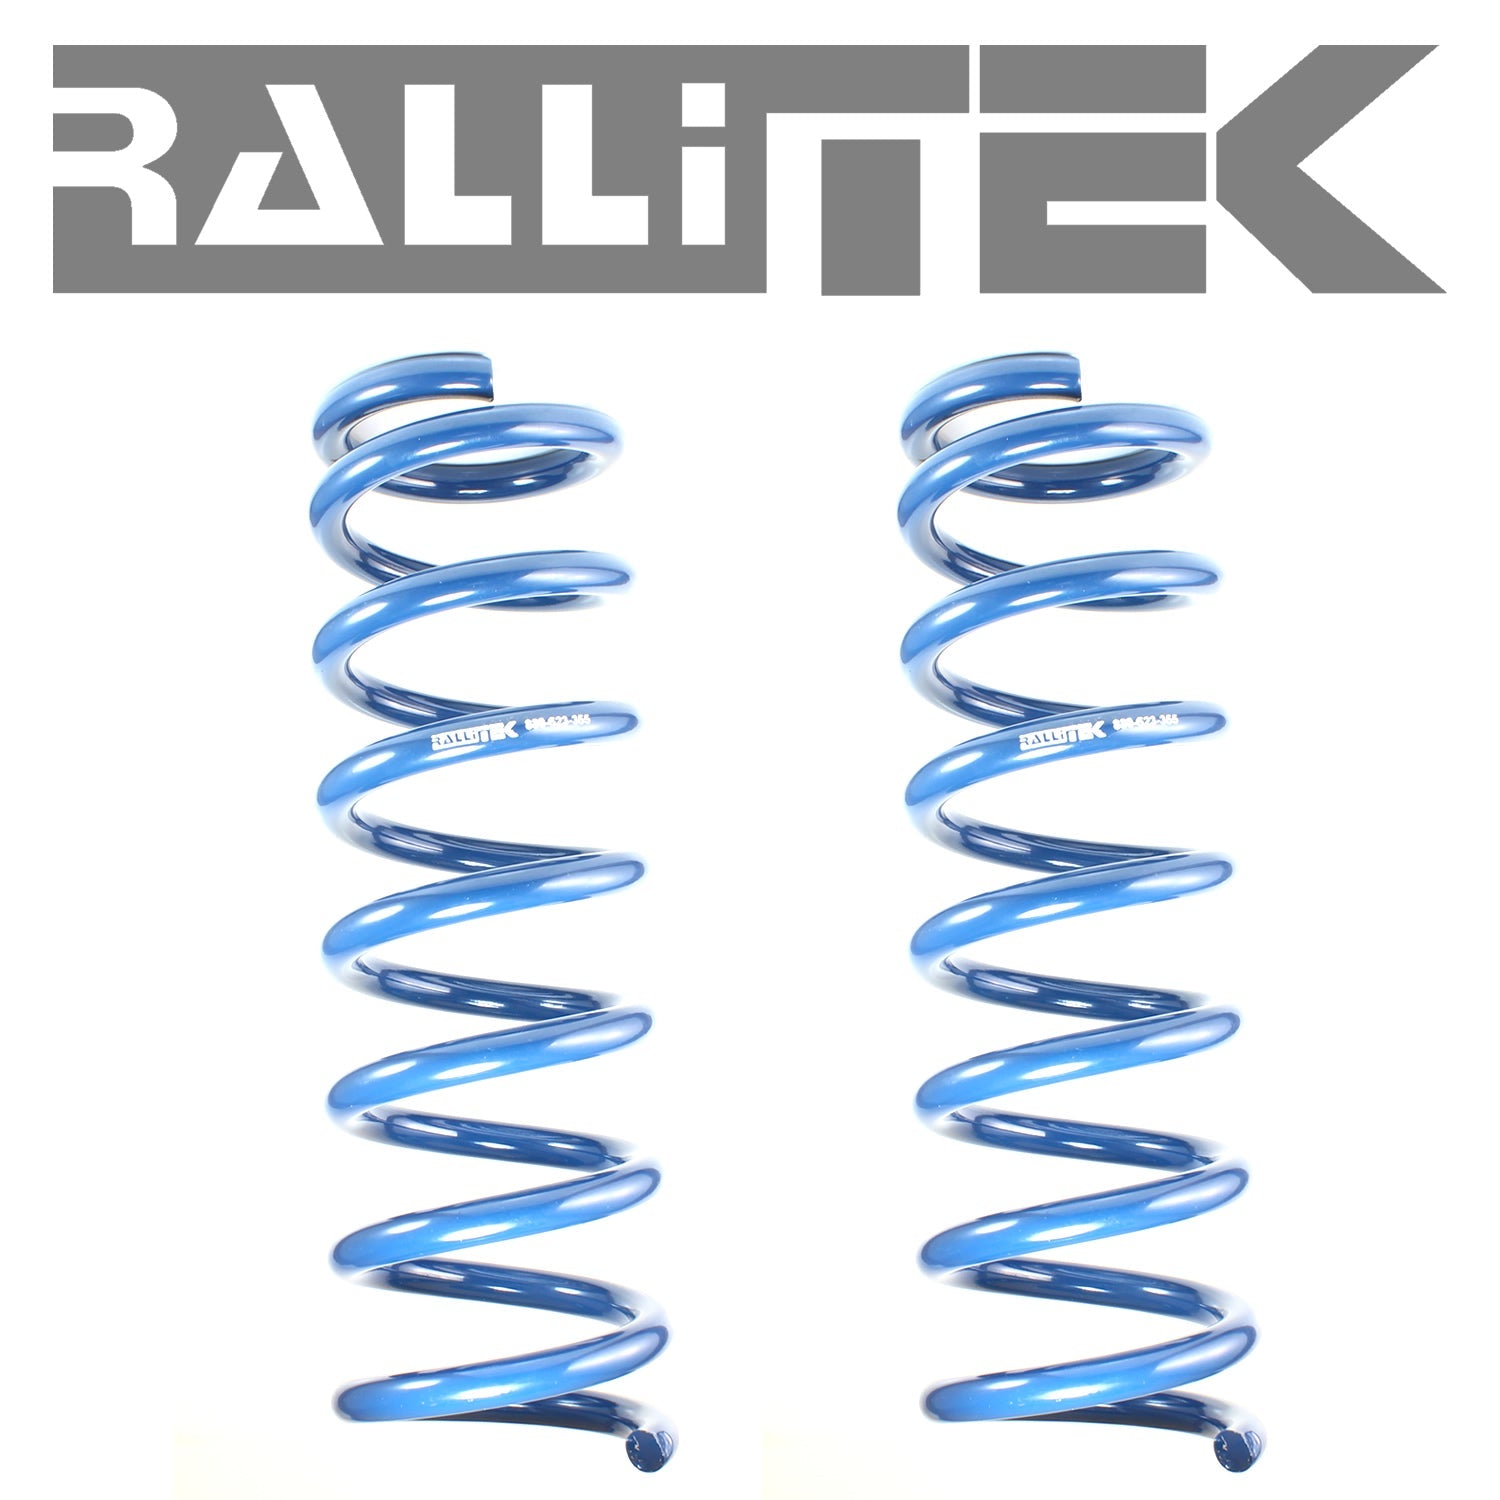 RalliTEK 1.4" Rear Raised Overload Springs & KYB Excel-G Struts Assembled - Outback 2005-2009